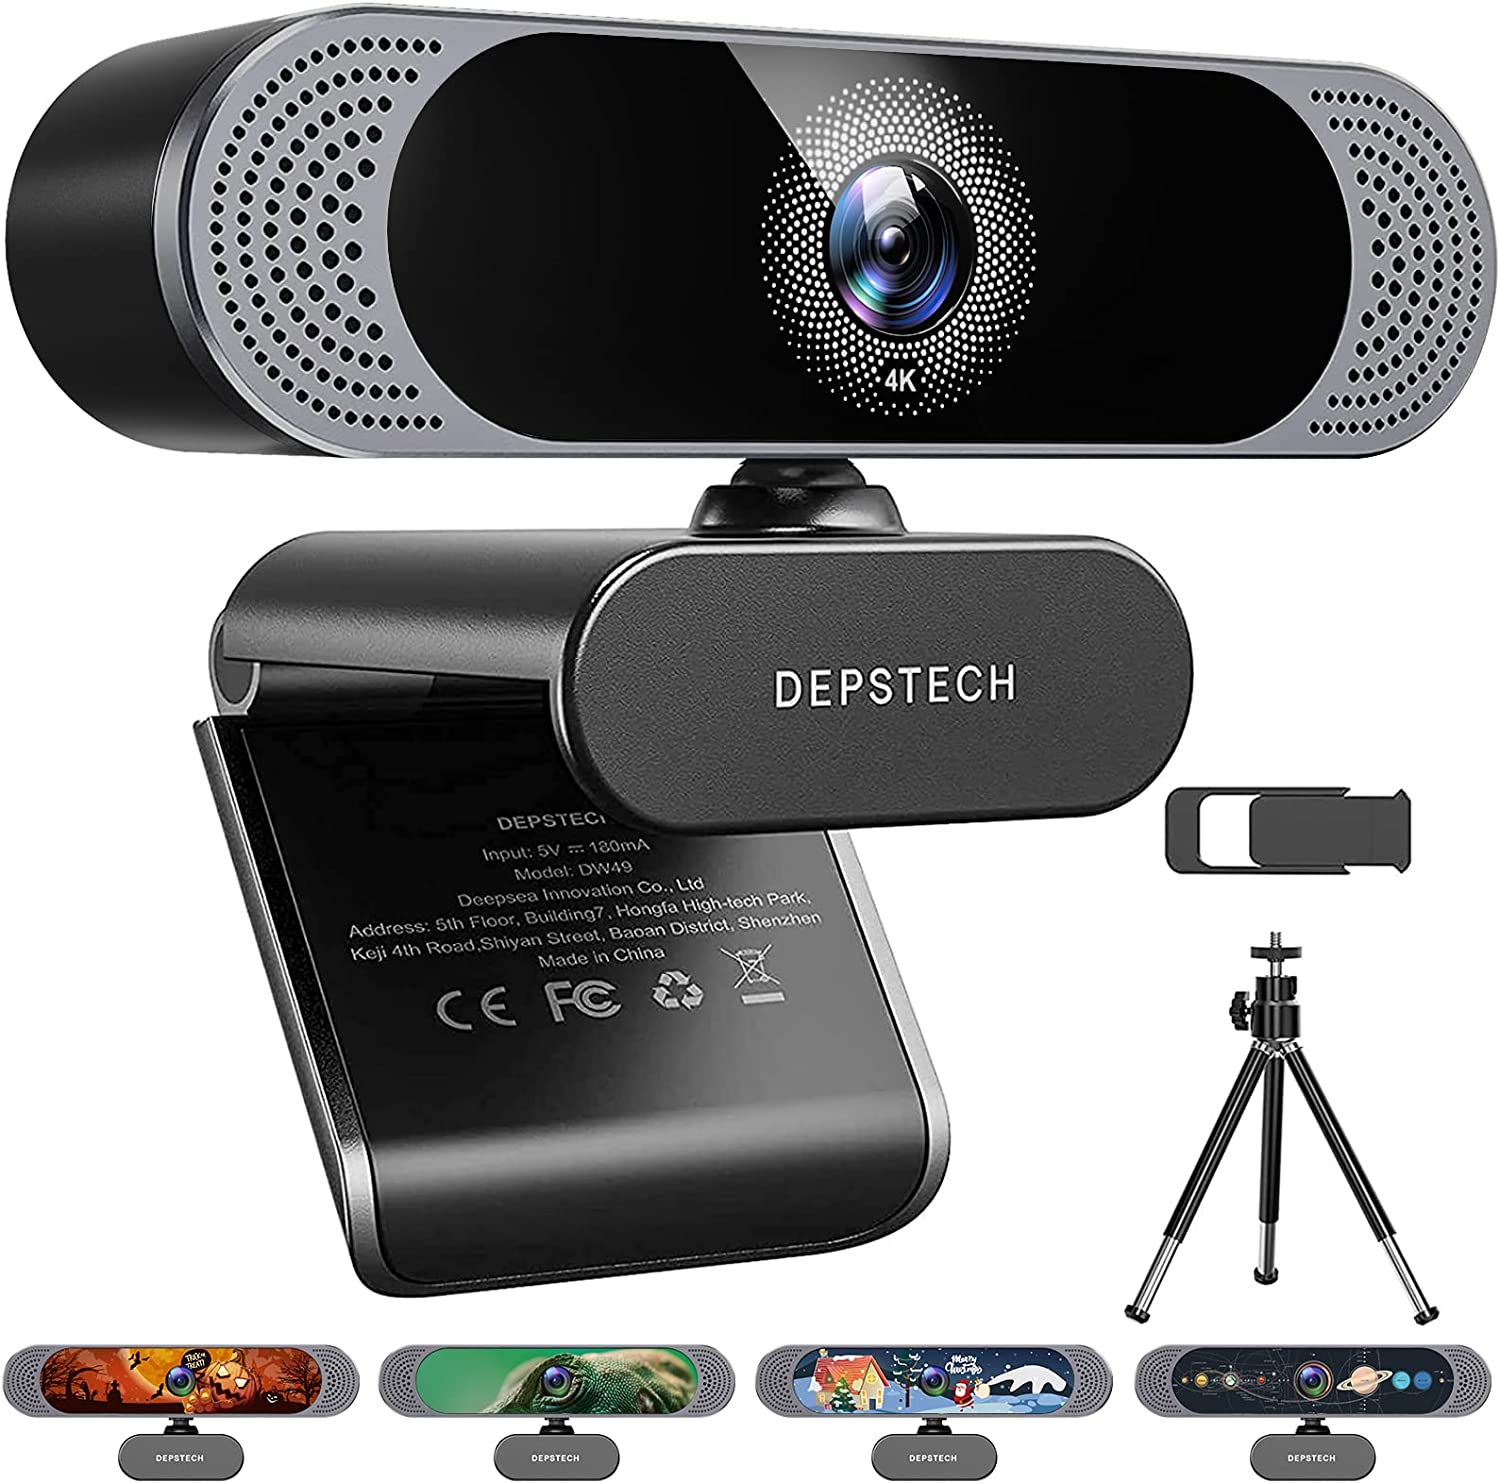 4K 웹캠, DEPSTECH DW49 HD 8MP Sony Sensor 자동 초점 웹캠(마이크 포함), 개인 정보 보호 커버 및 삼각대, 플러그 앤 플레이 USB 컴퓨터 웹 카메라(Pro Streaming/Online Teaching/Video Calling/Zoom/Skype)